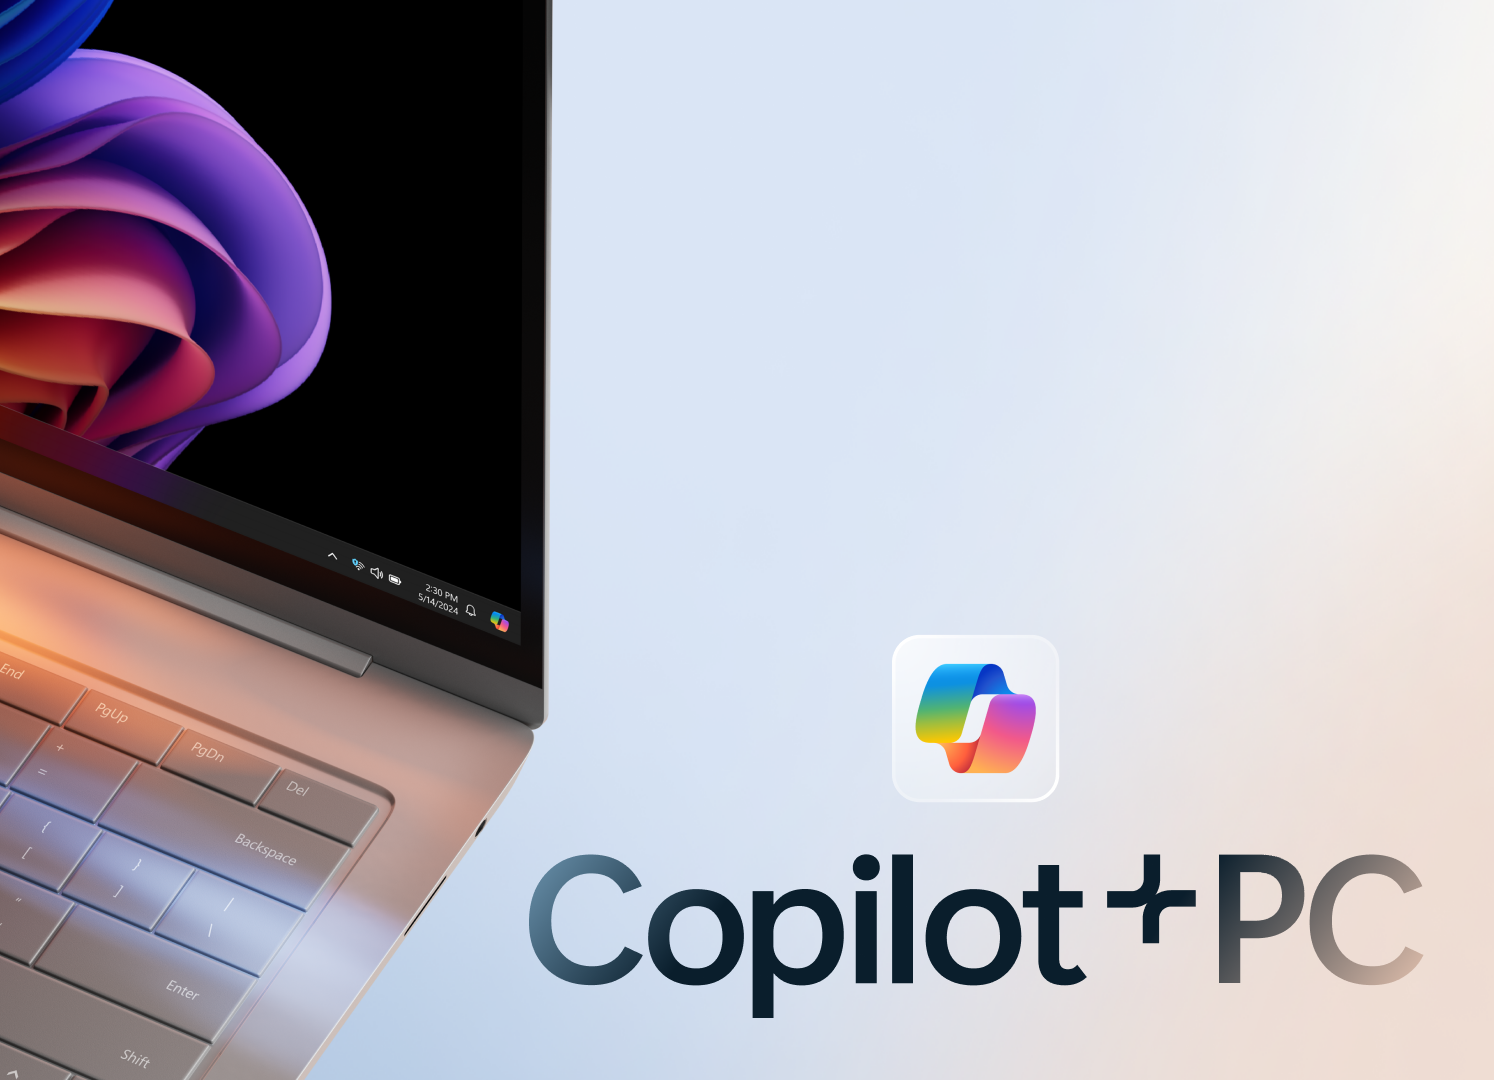 Laptop computer along with Copilot logo and text reading Copilot+ PC